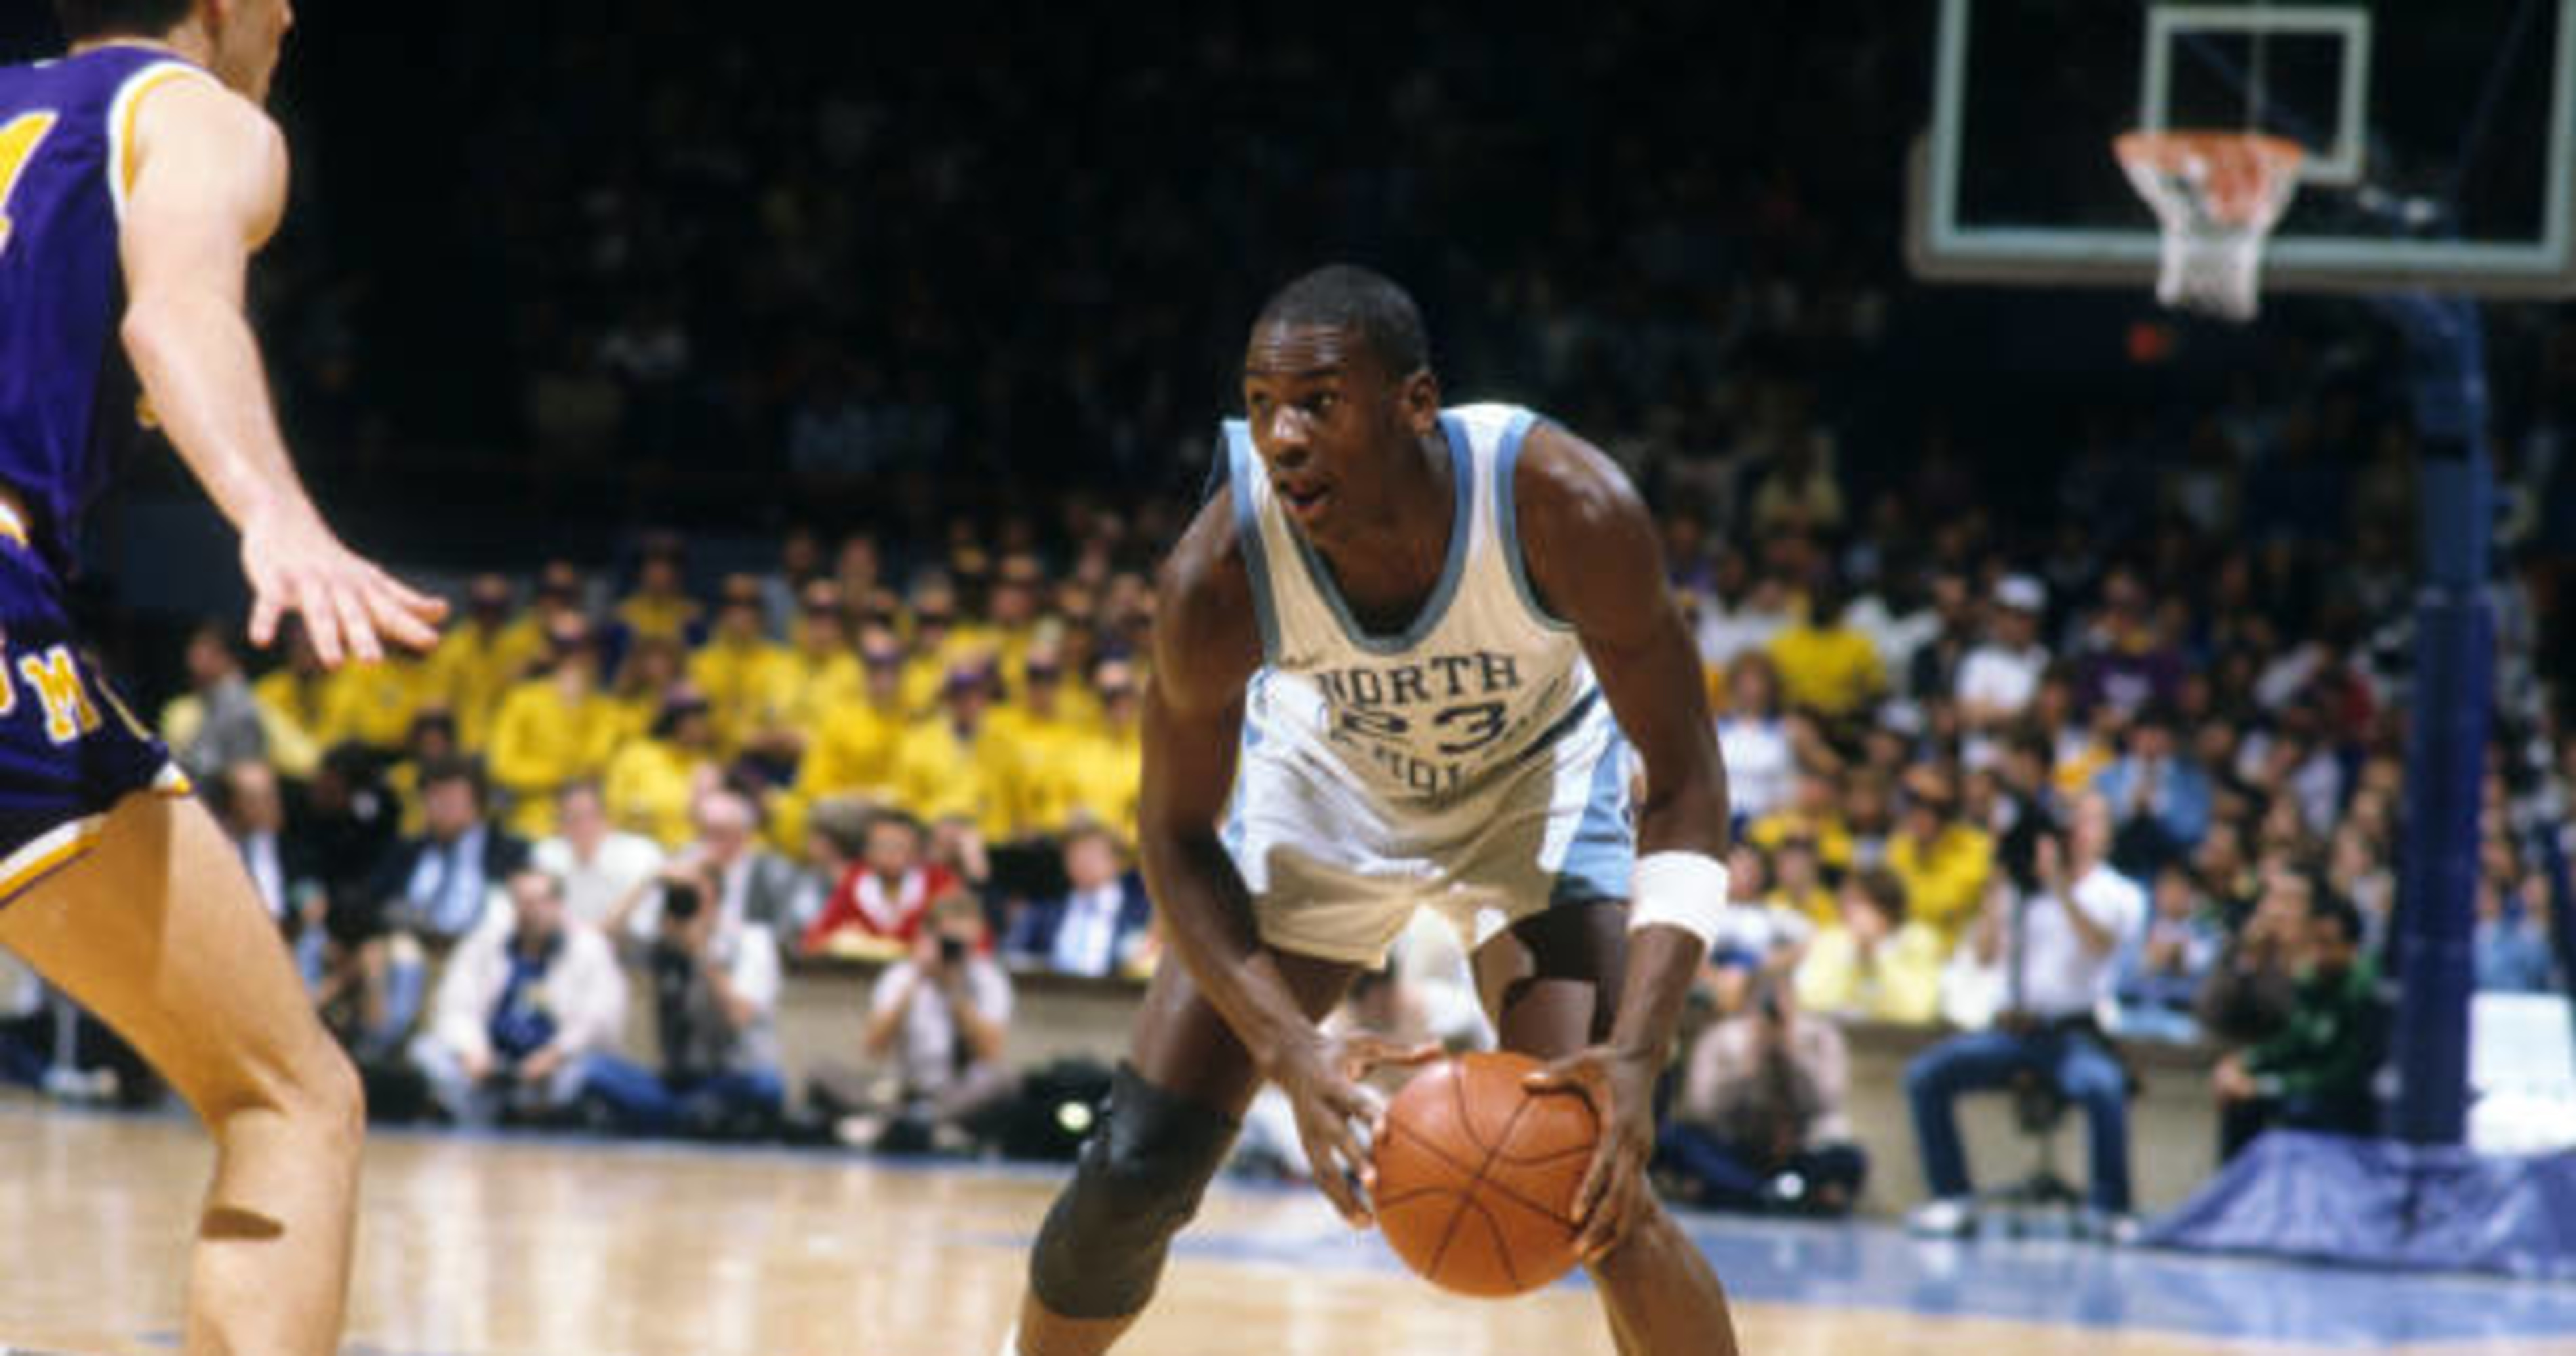 Michael Jordan Carolina Basketball Facts - University of North